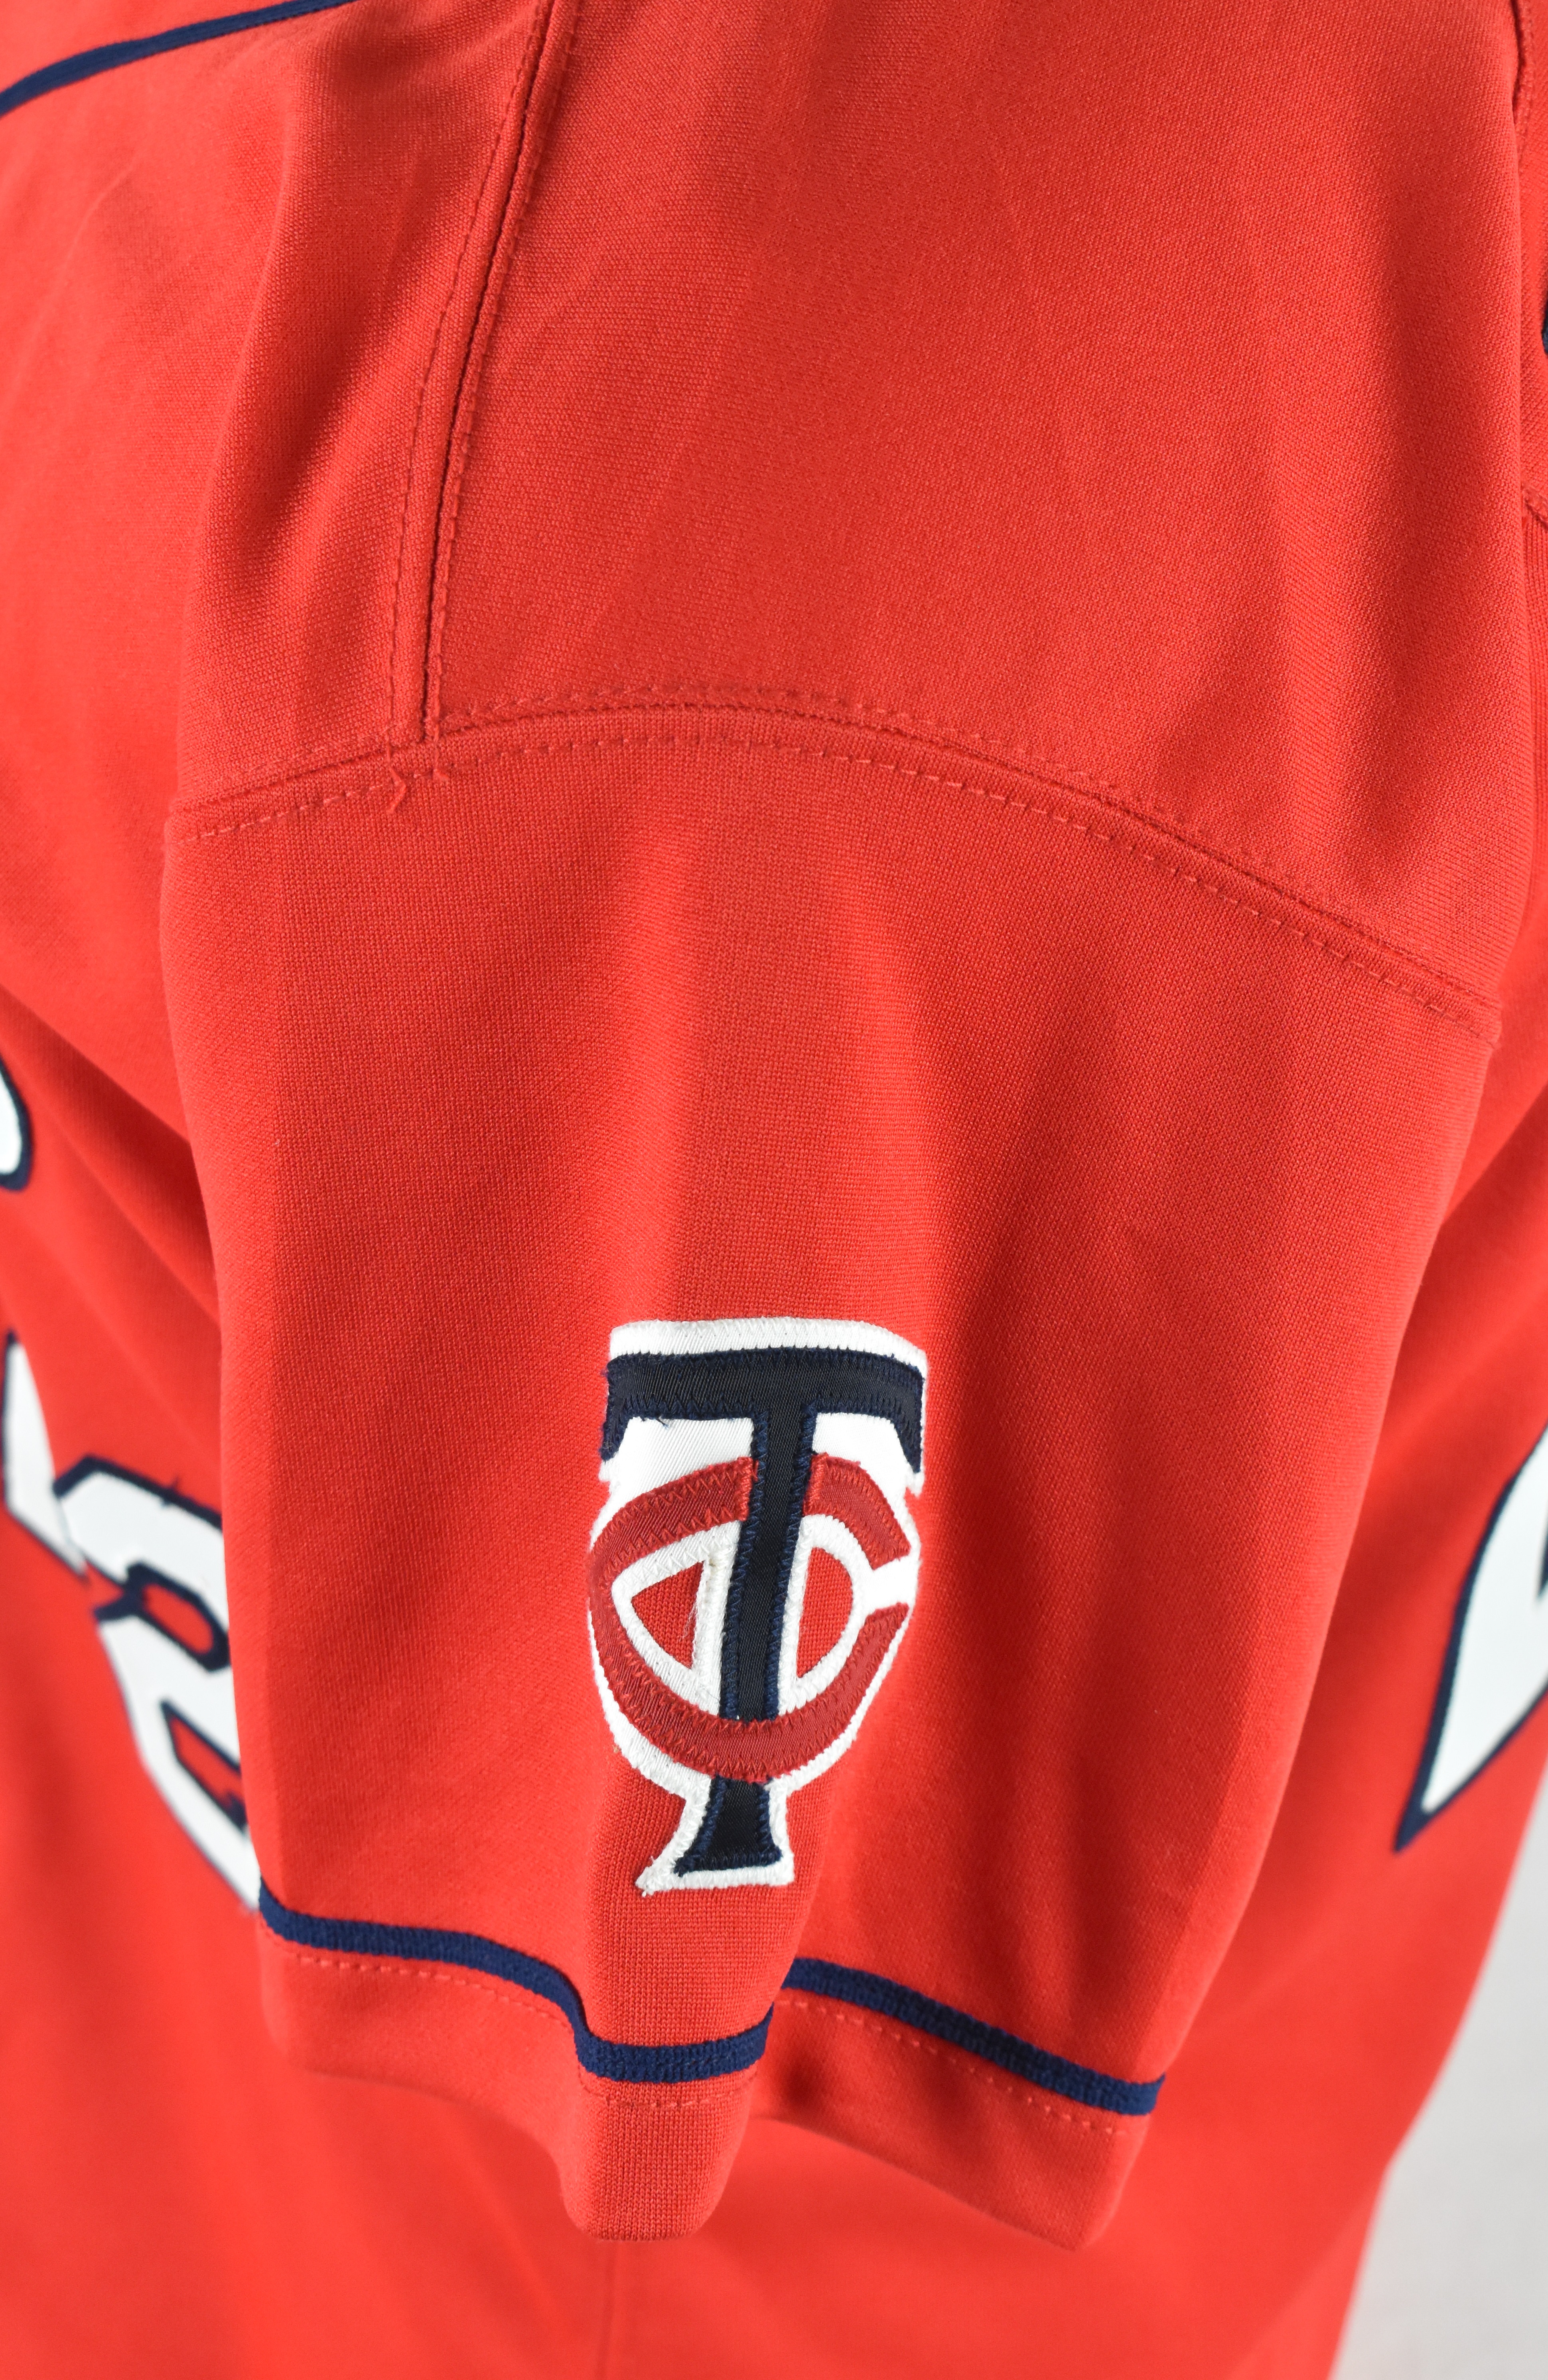 Baseball Minnesota Twins Customized Number Kit for 1997 Red Alternate  Uniform